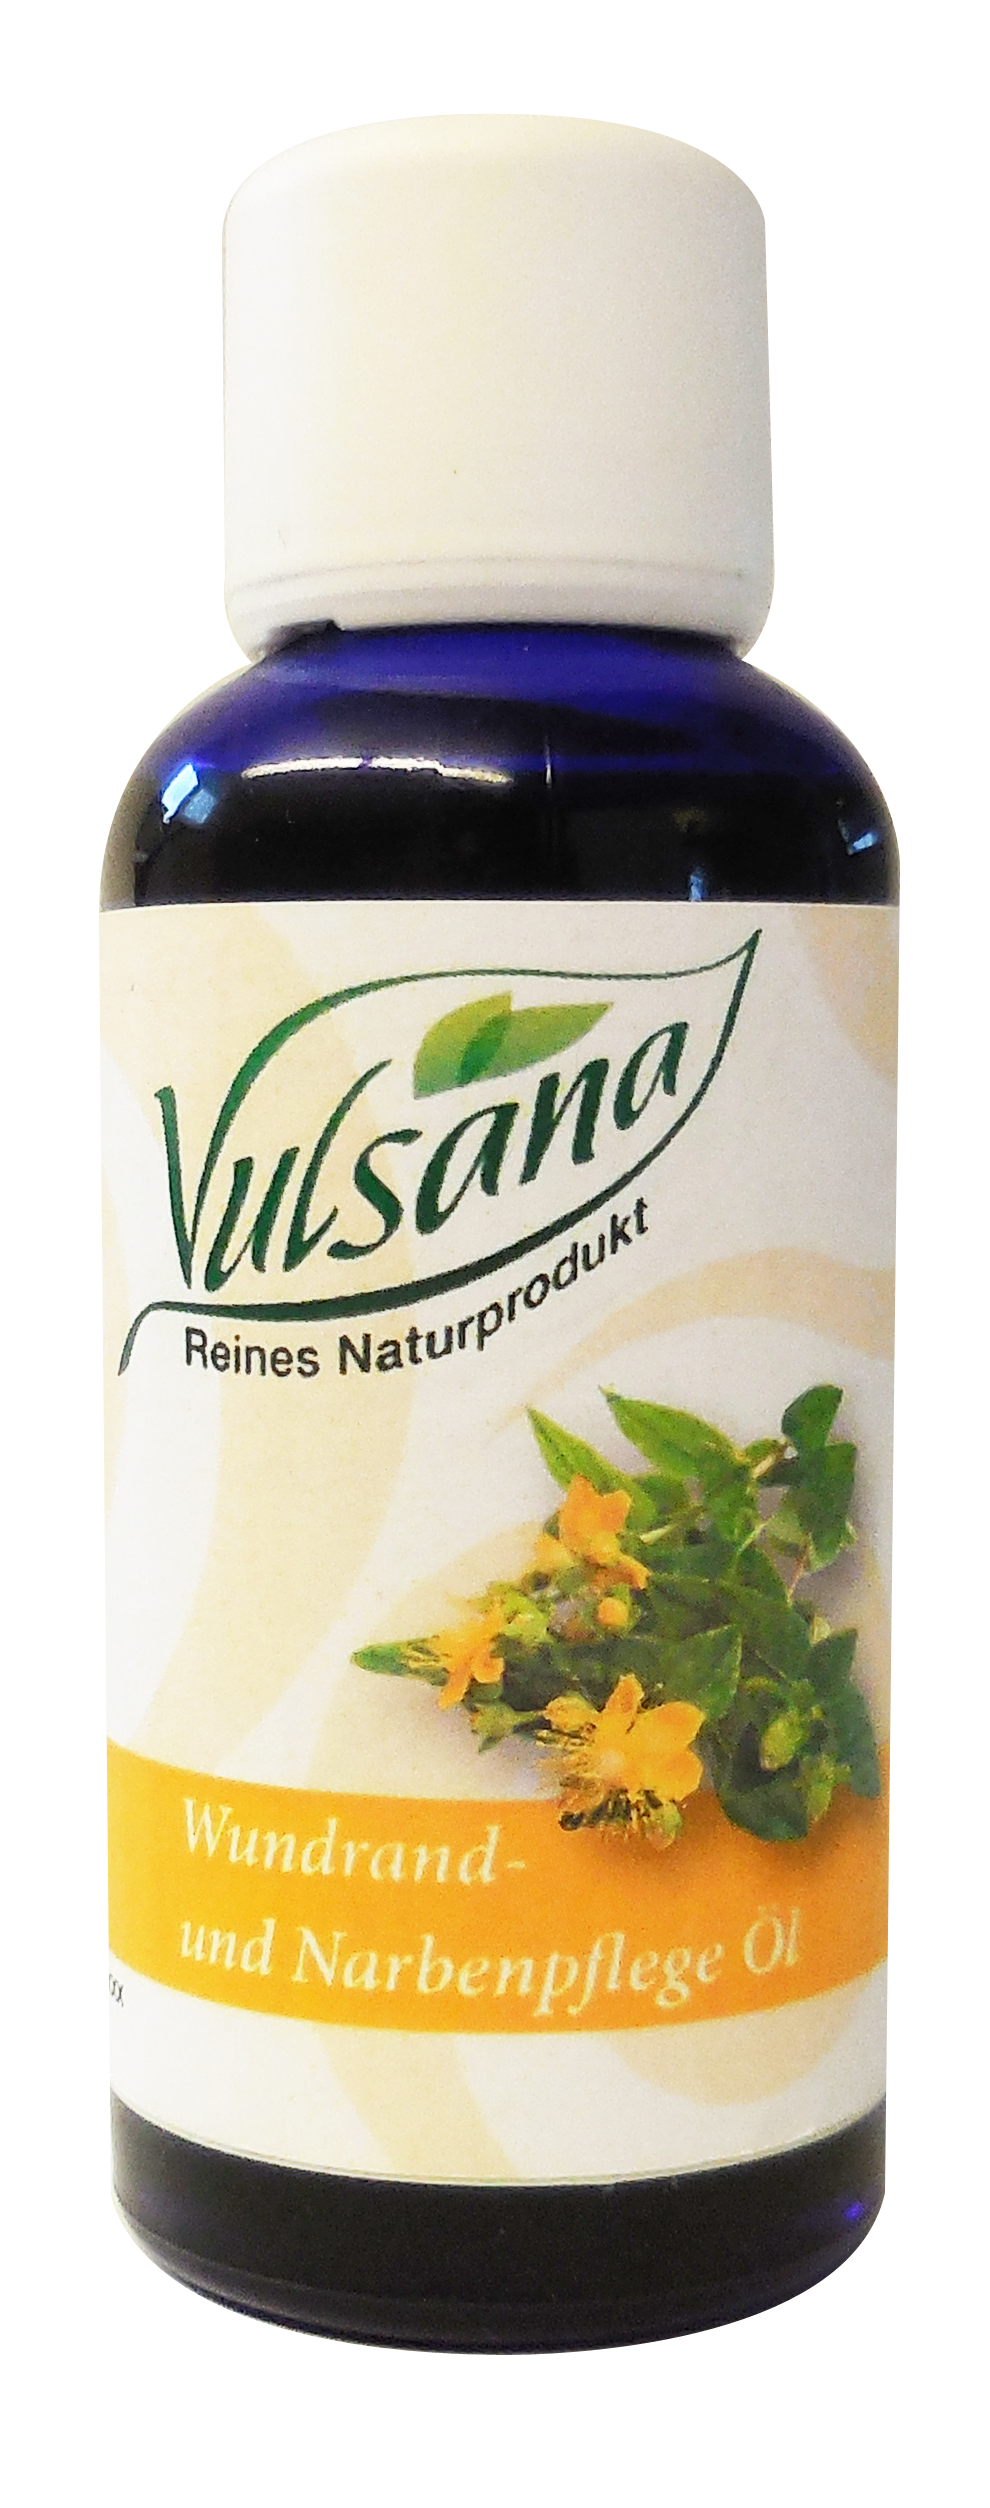 Vulsana Wundrand- und Narbenpflege Öl